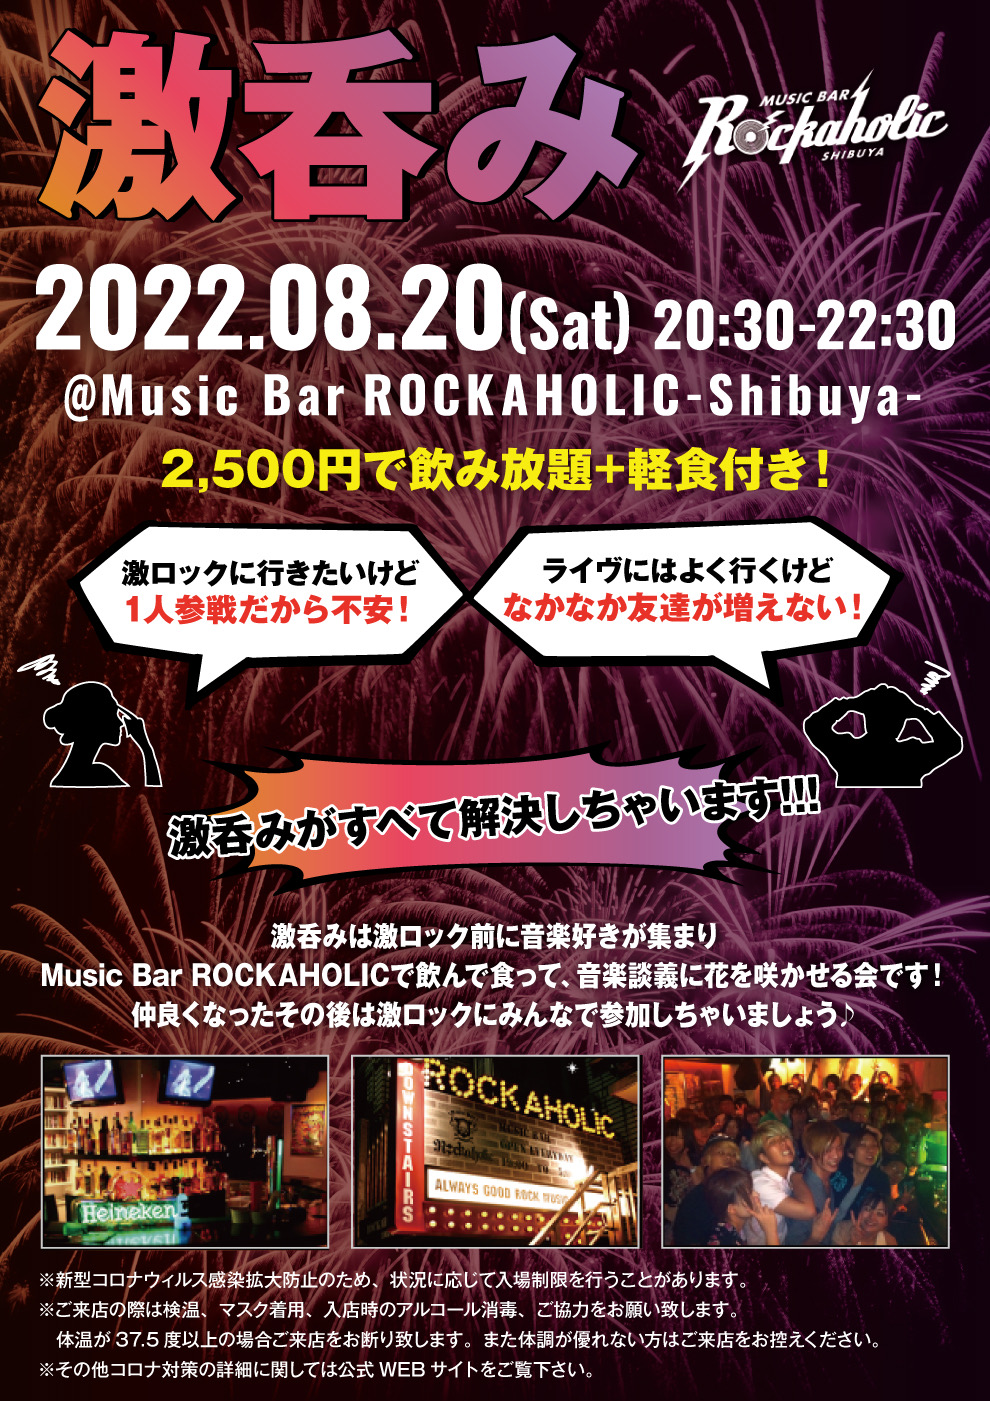 https://bar-rockaholic.jp/shibuya/blog/5683E2AF-E087-44B0-96A6-3D1CA25255EB.jpeg